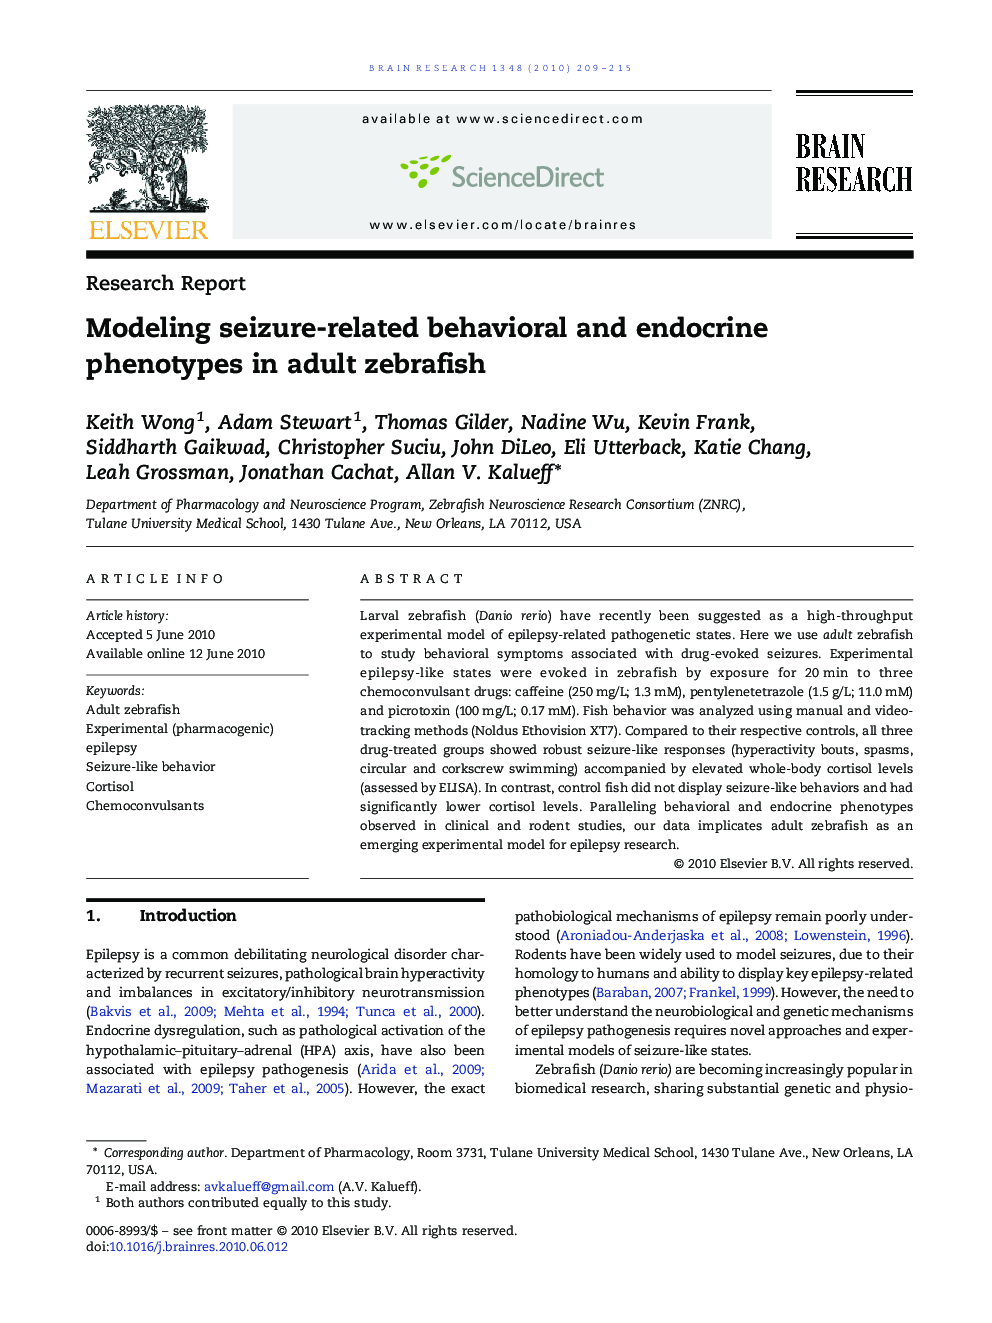 Modeling seizure-related behavioral and endocrine phenotypes in adult zebrafish